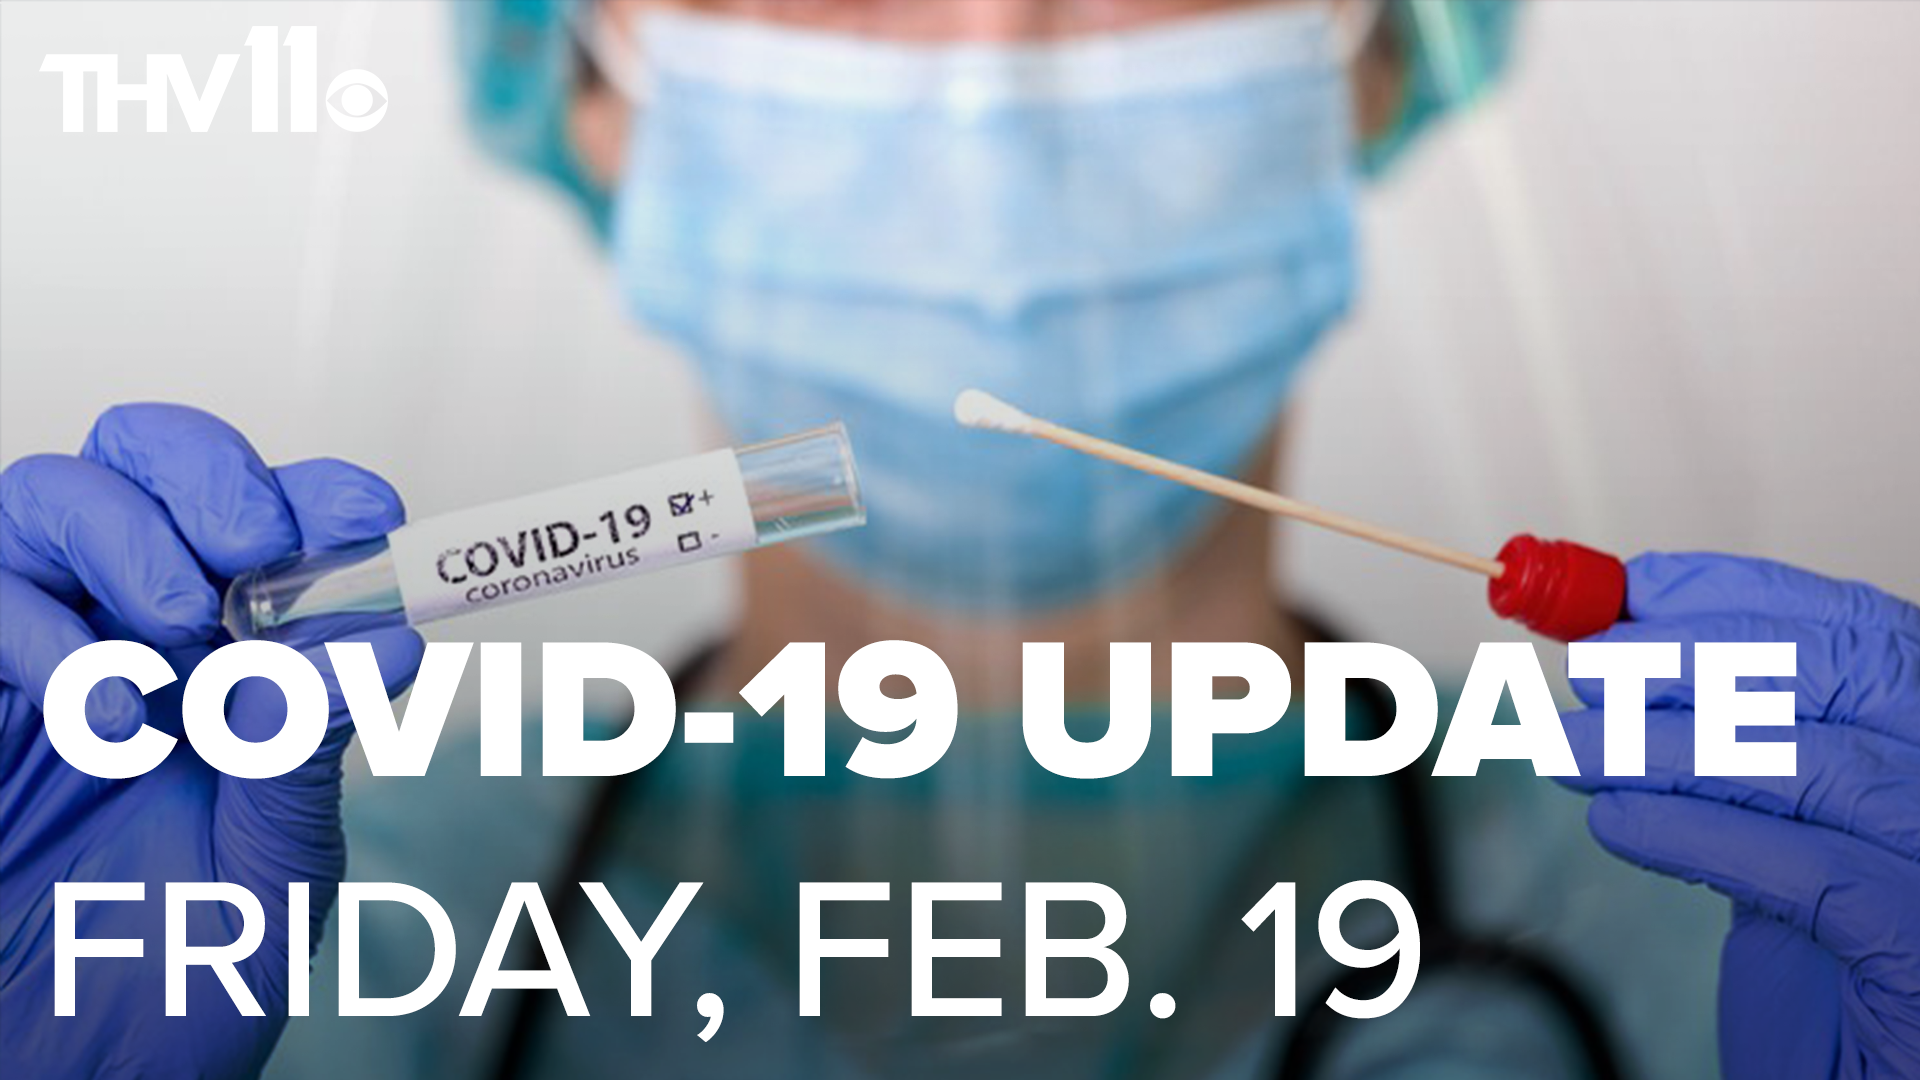 Rolly Hoyt provides an update on the coronavirus in Arkansas for Friday, February 19.